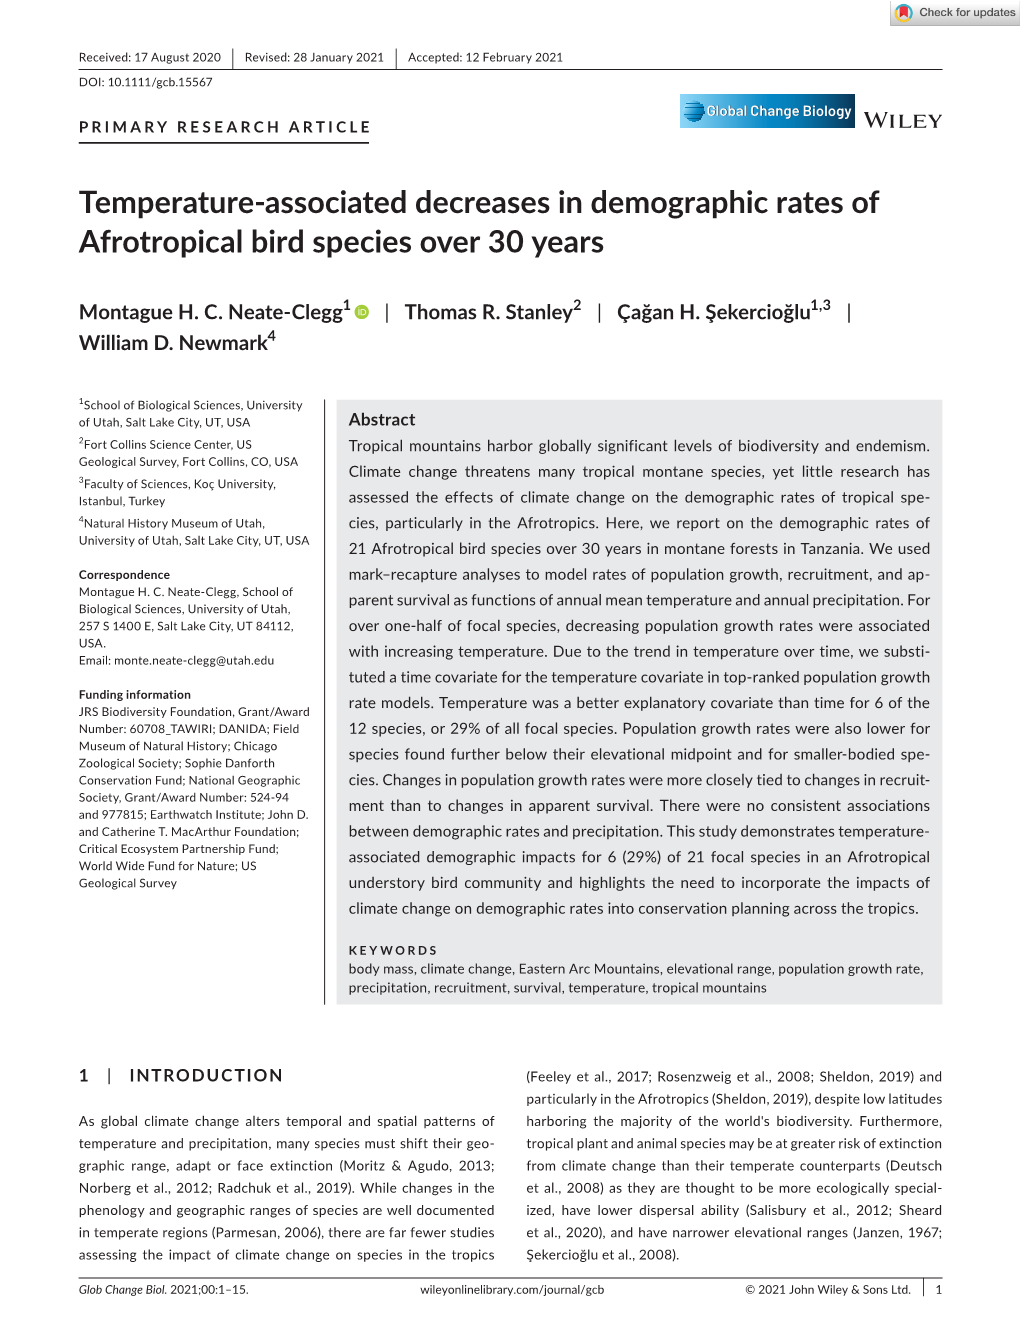 Temperature‐Associated Decreases in Demographic Rates of Afrotropical